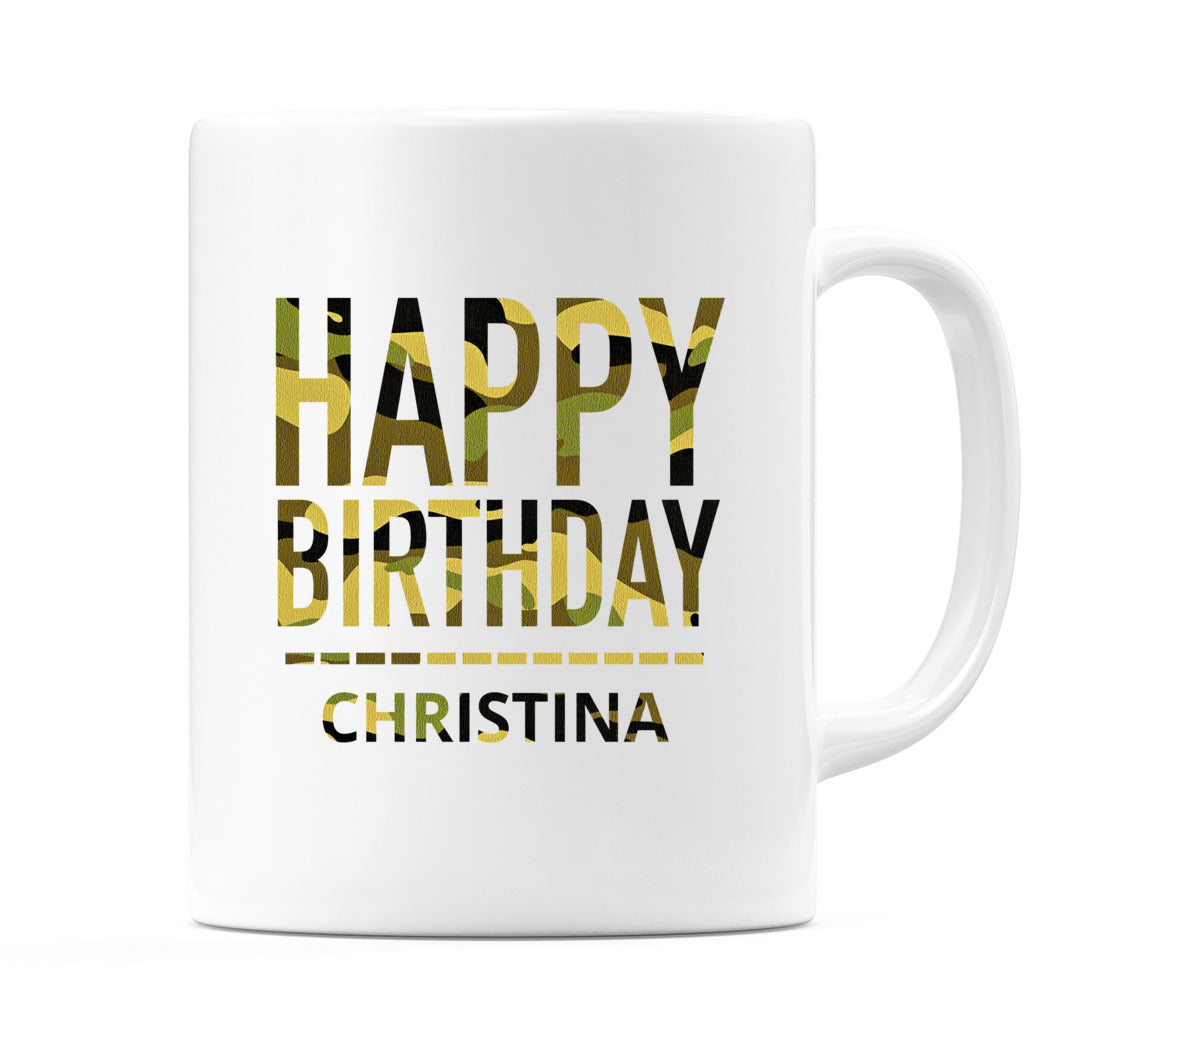 Happy Birthday Christina (Camo) Mug Cup by WeDoMugs